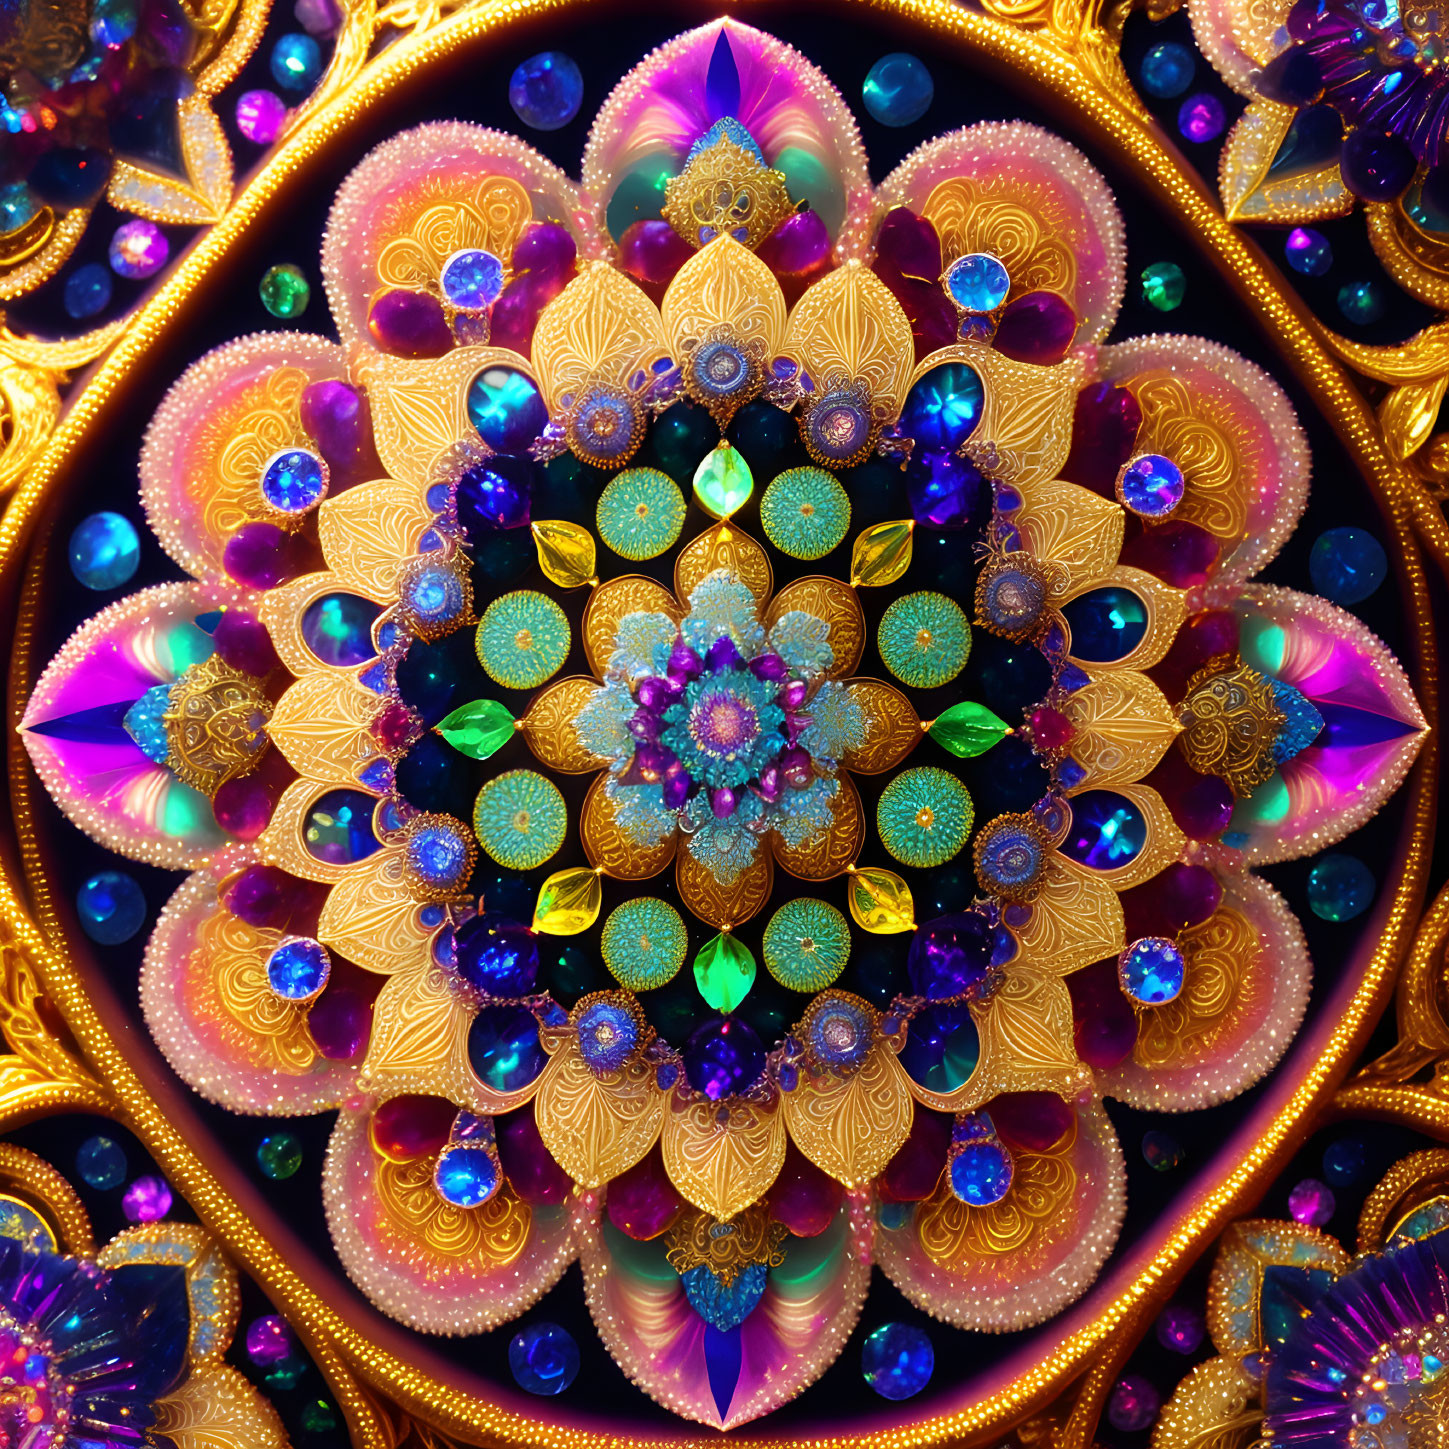 Intricate Gold and Gemstone Mandala in Vibrant Hues